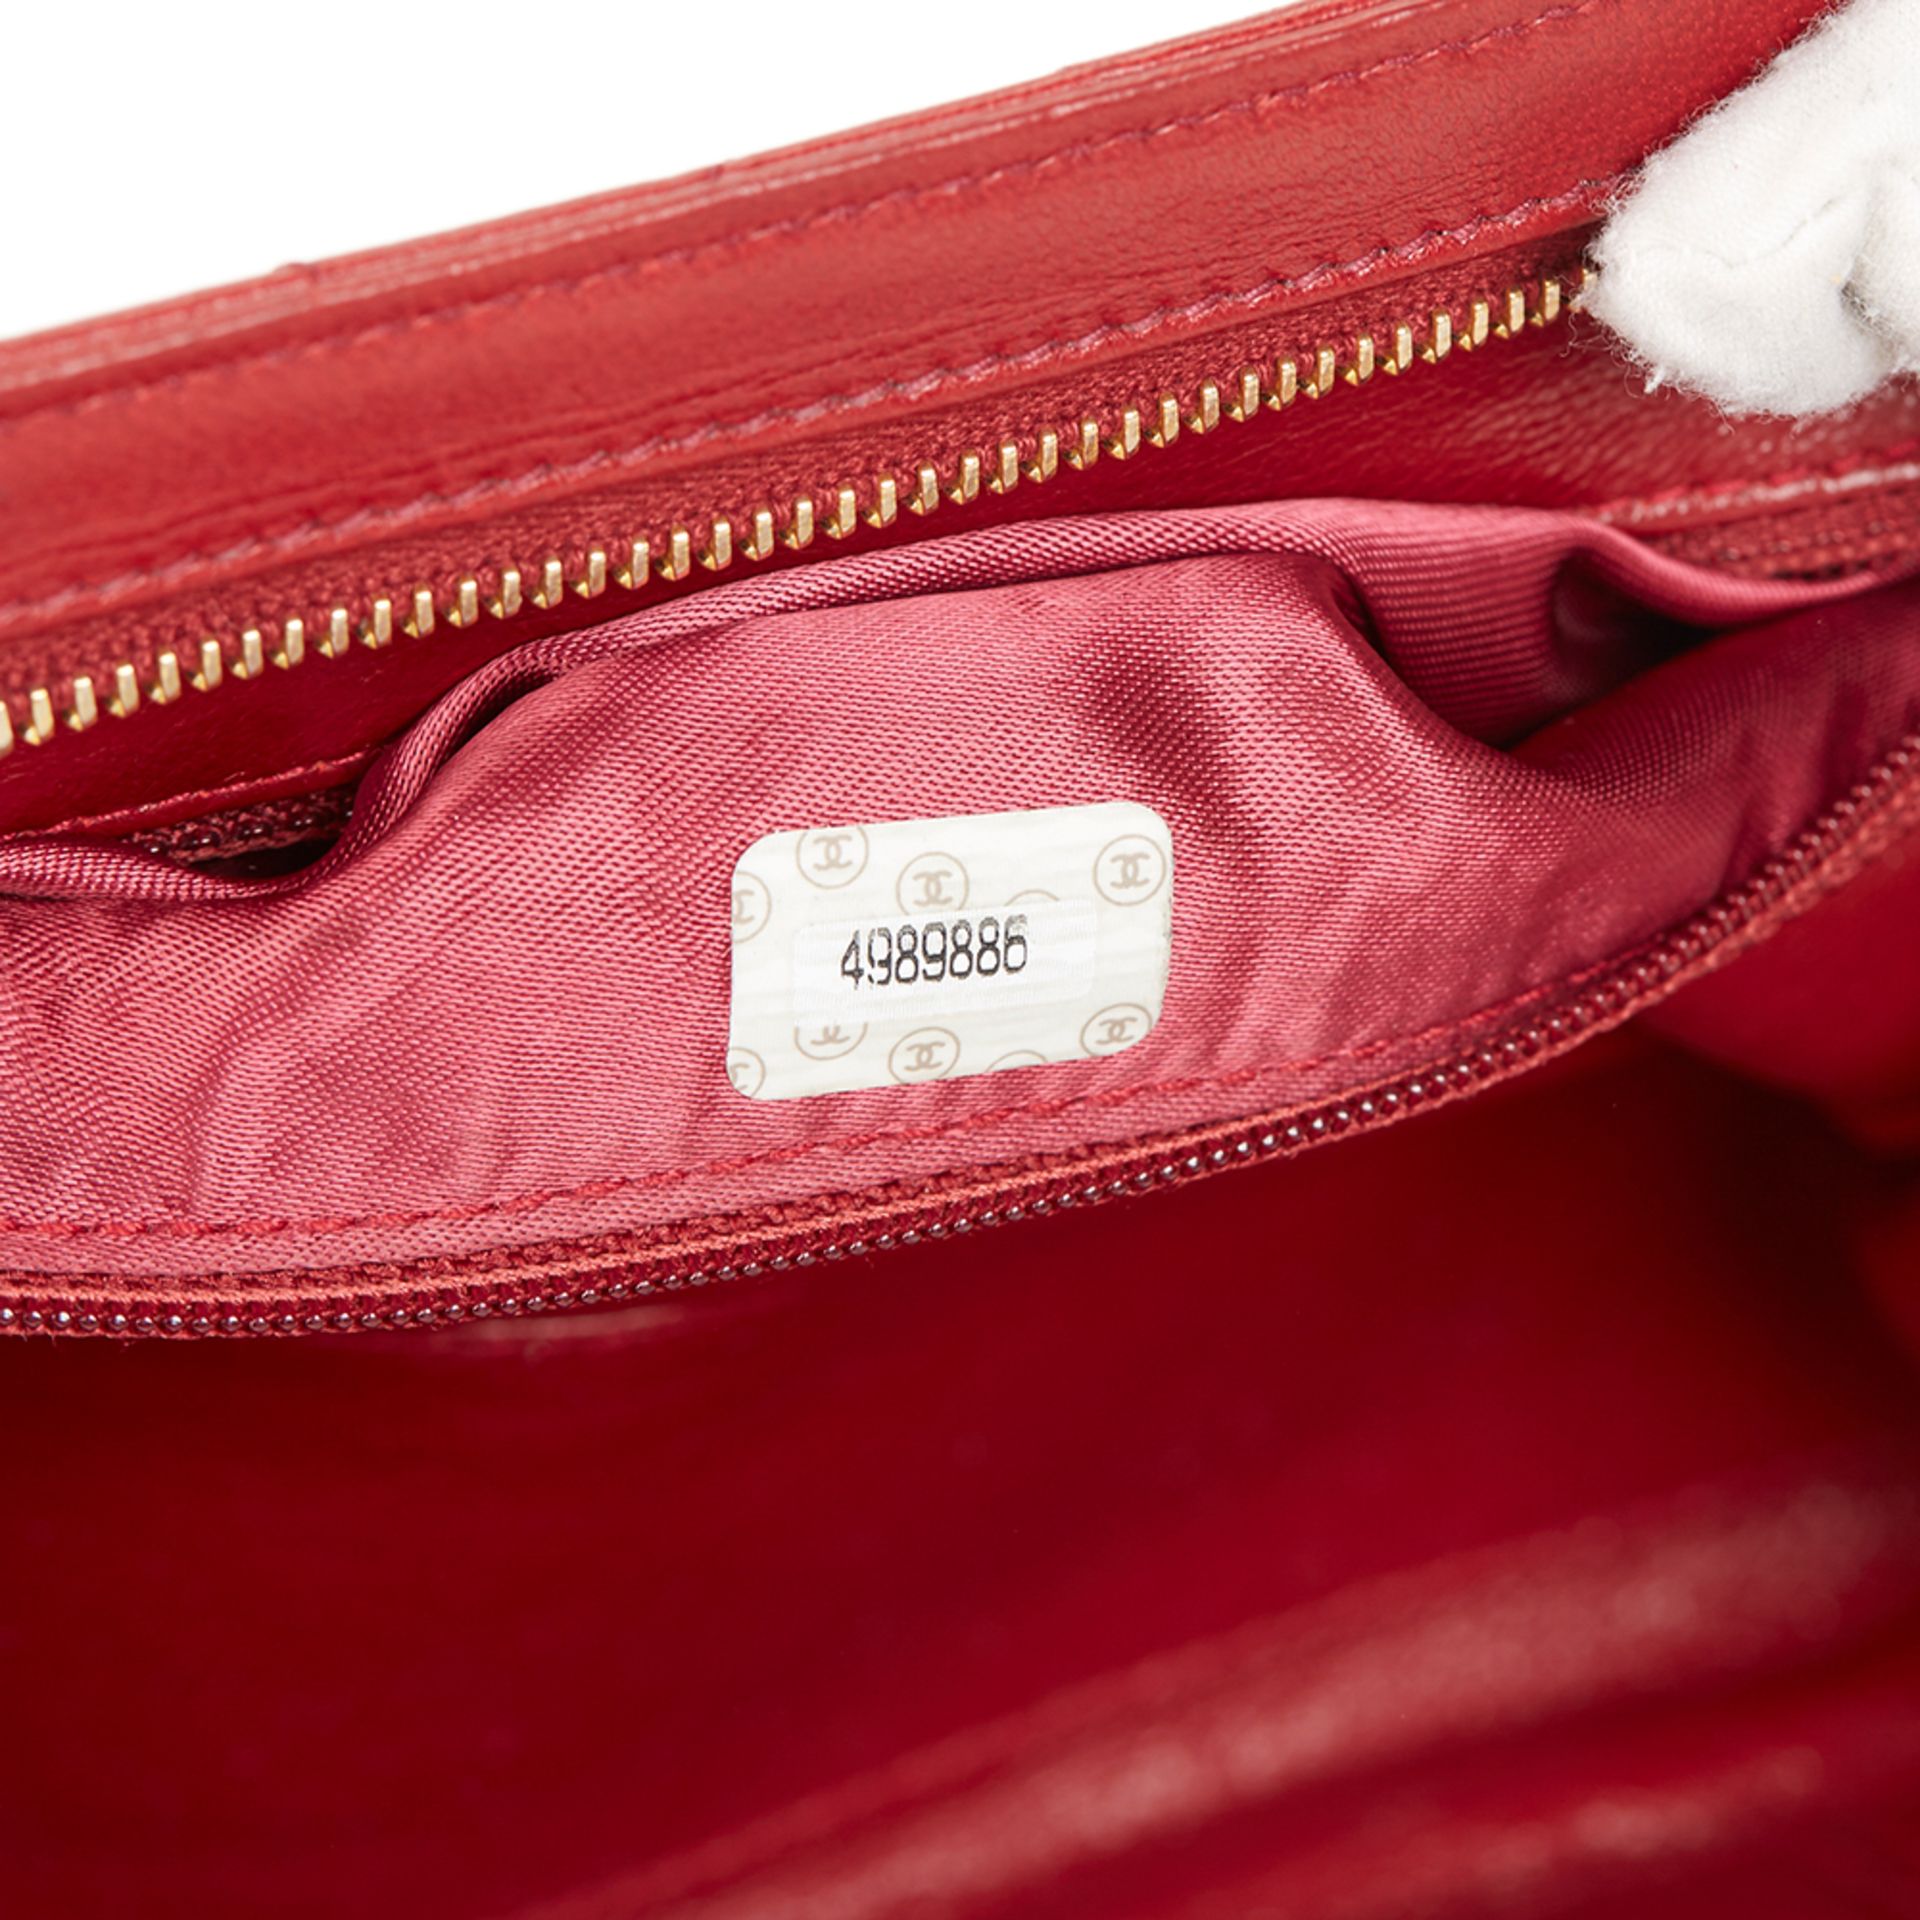 Chanel Timeless Frame Bag - Image 7 of 16